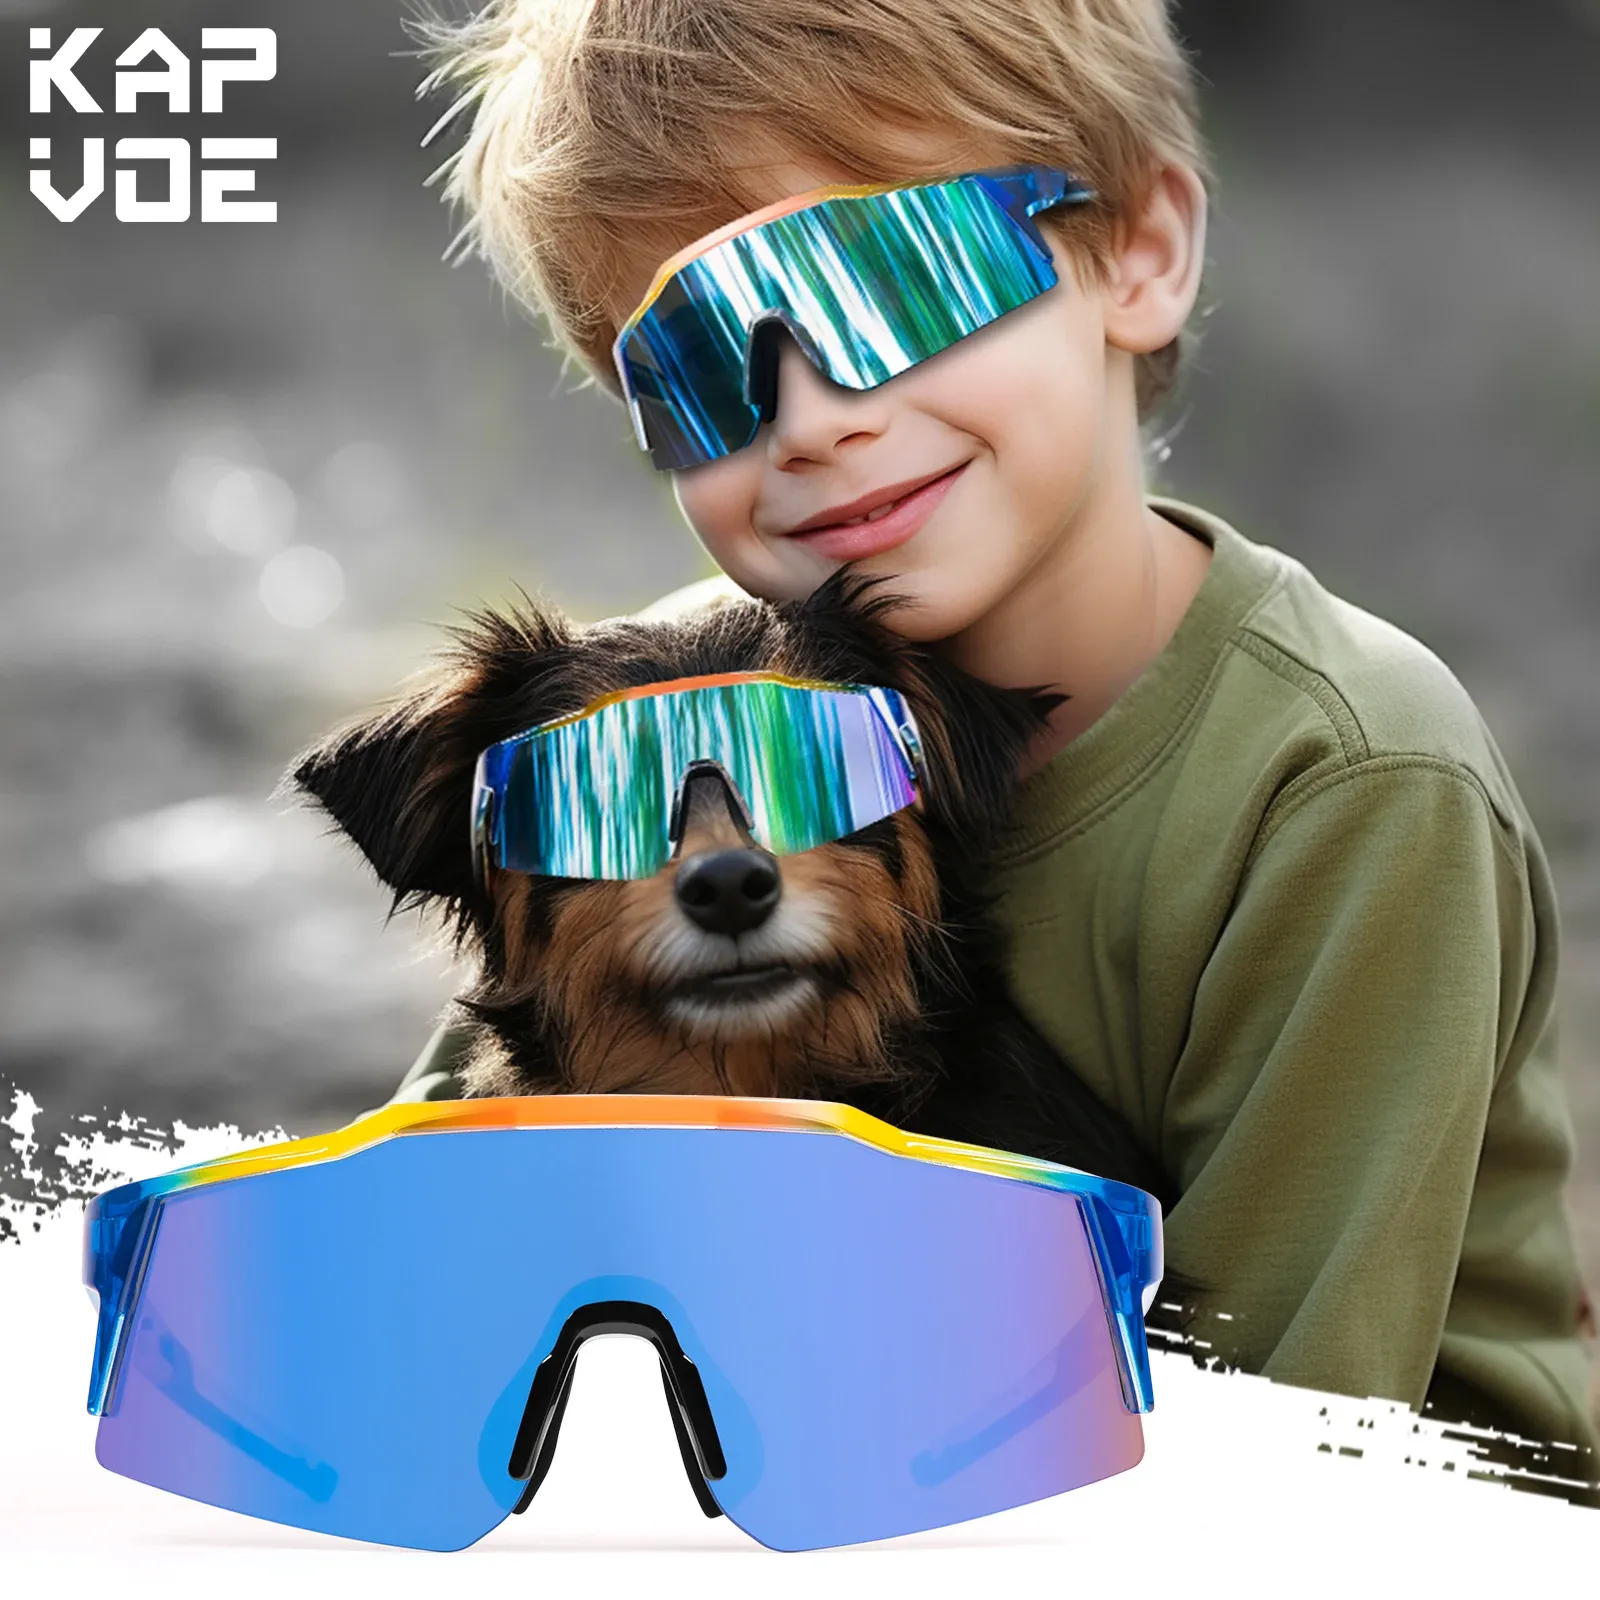 Sunglasses Kapvoe Child Sunglasses Cycling Glasses for Kids Bike UV400 Boys Girls Parentchild Outdoor Bicycle Sports Protection Eyewear